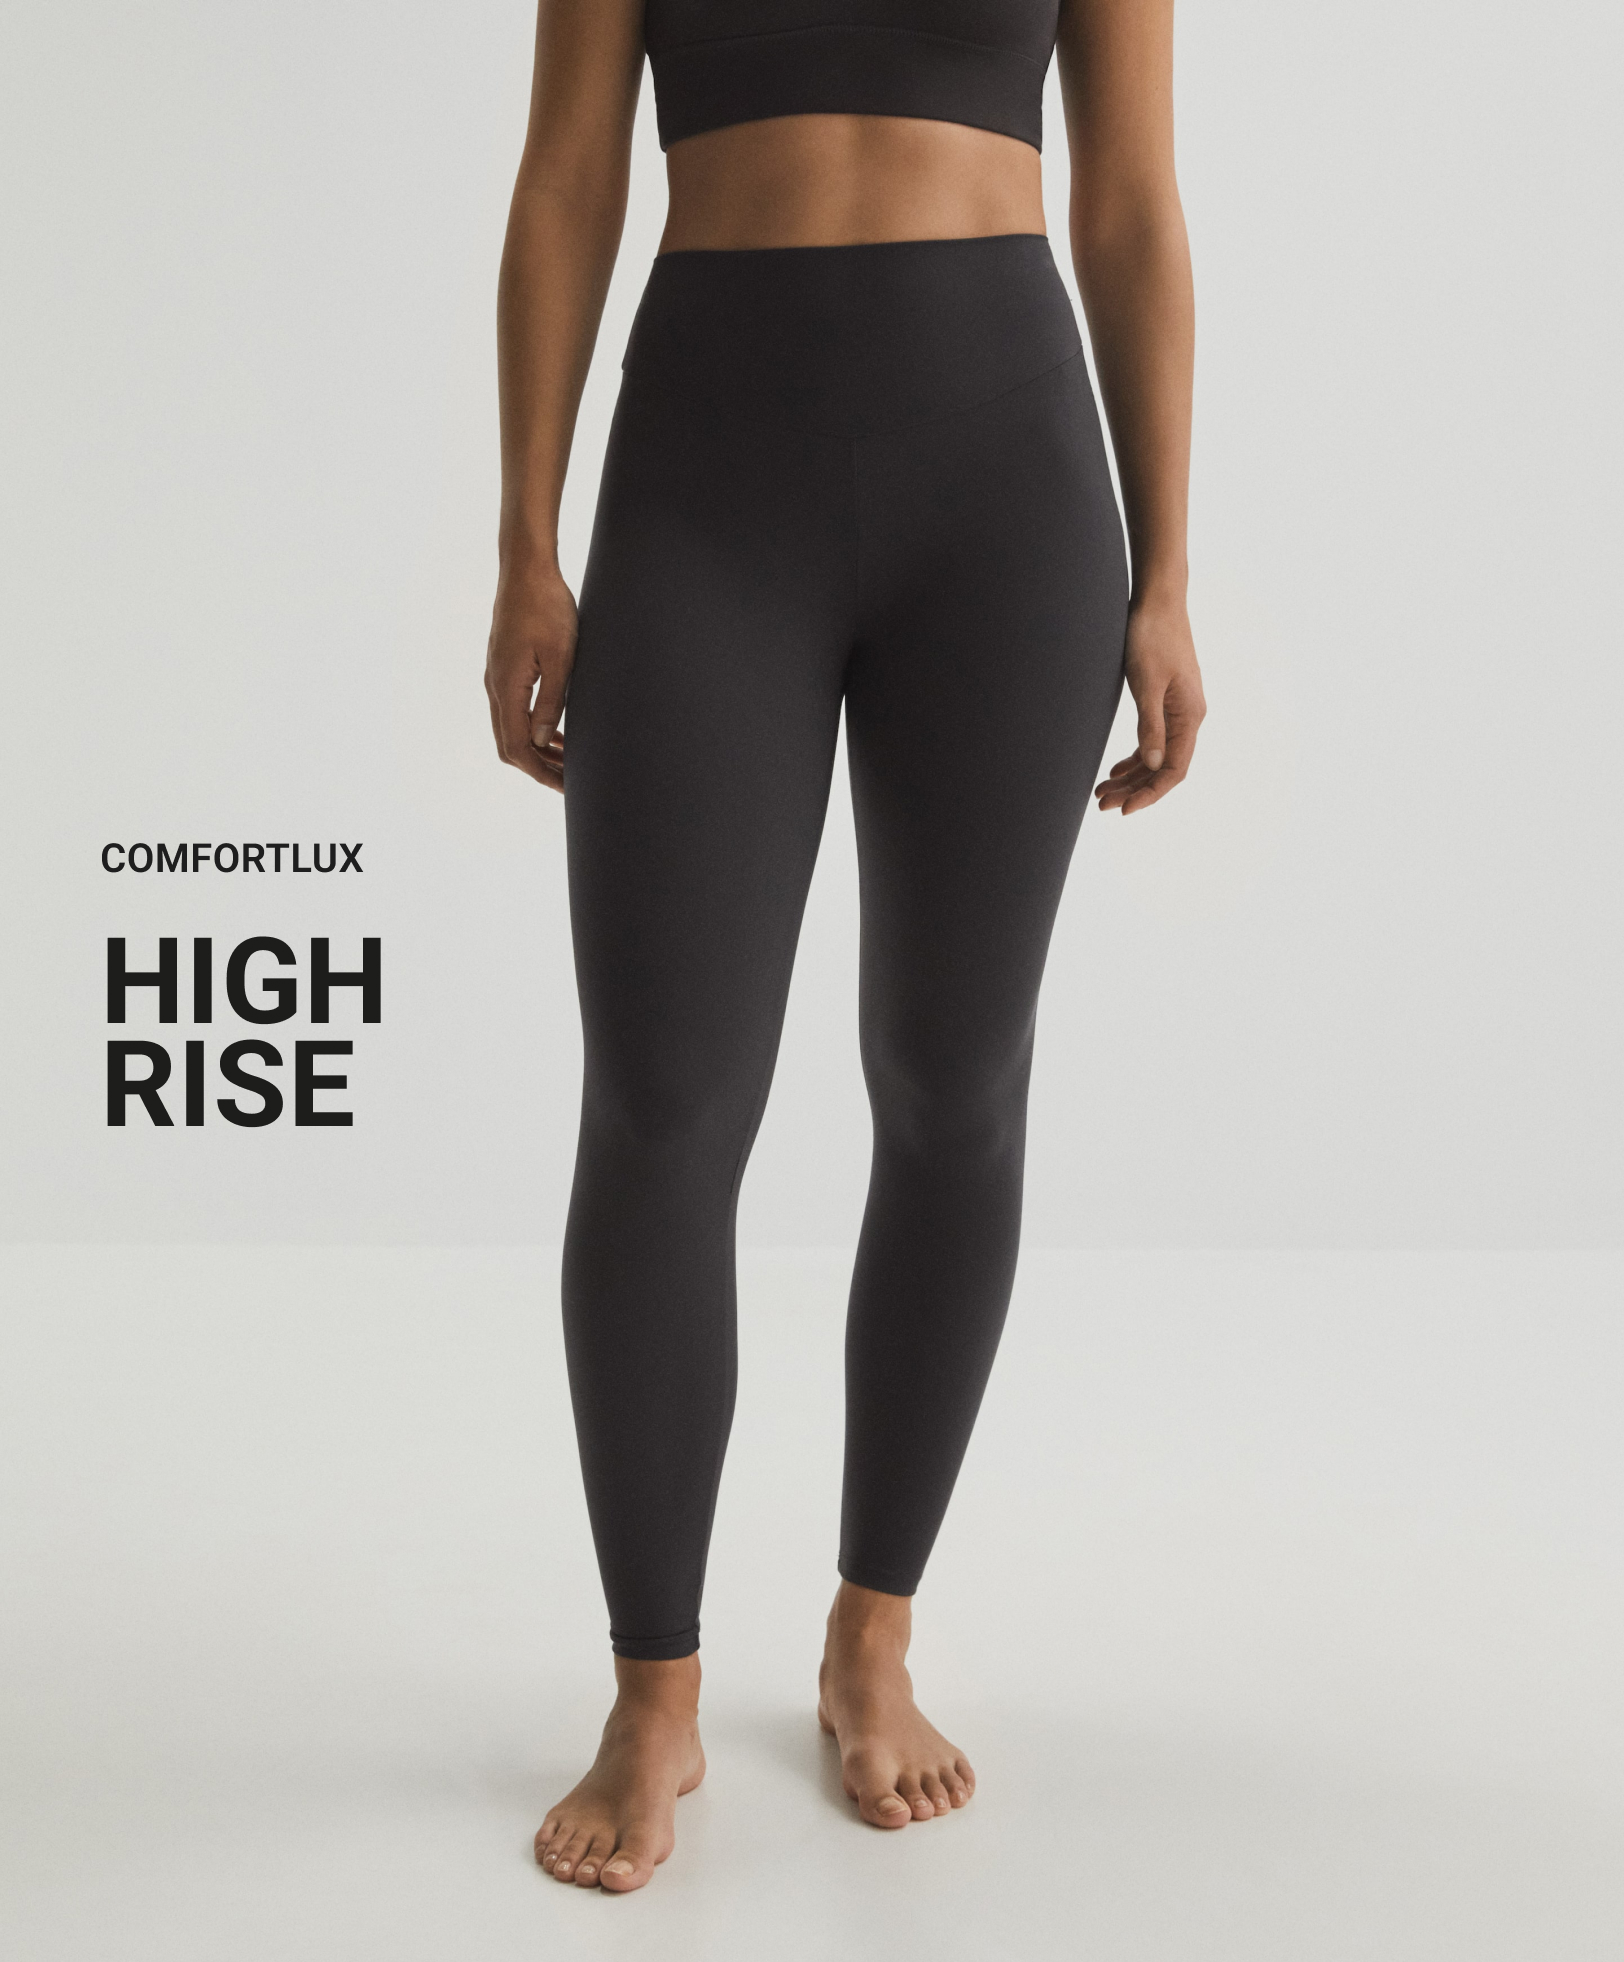 High rise comfortlux legging op enkellengte